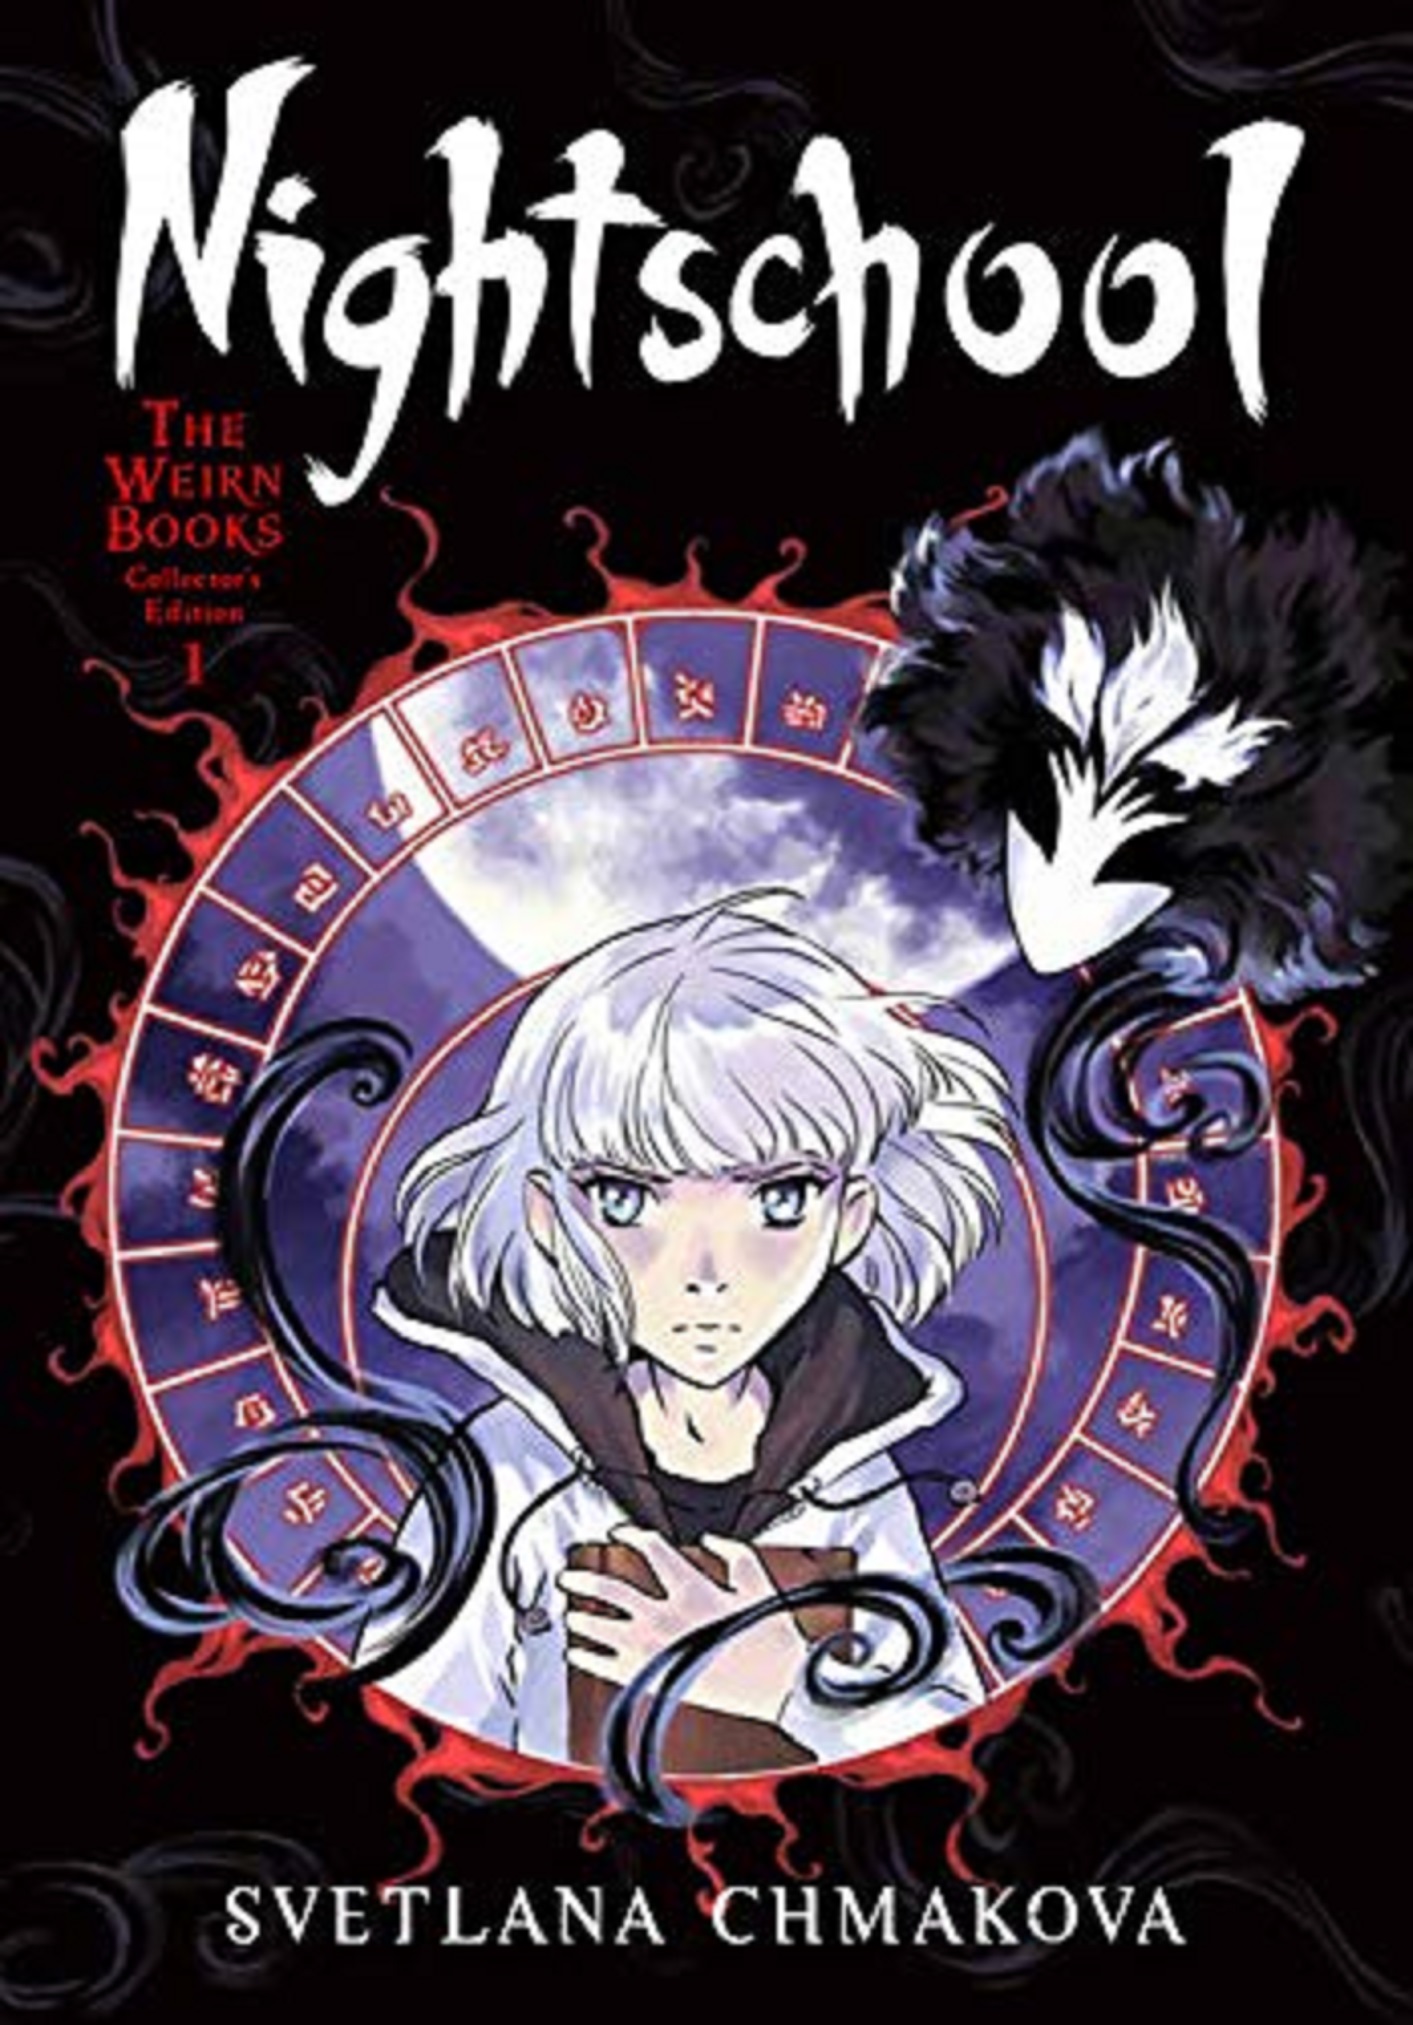 Nightschool: The Weirn Books Collector\'s Edition - Volume 1 | Svetlana Chmakova